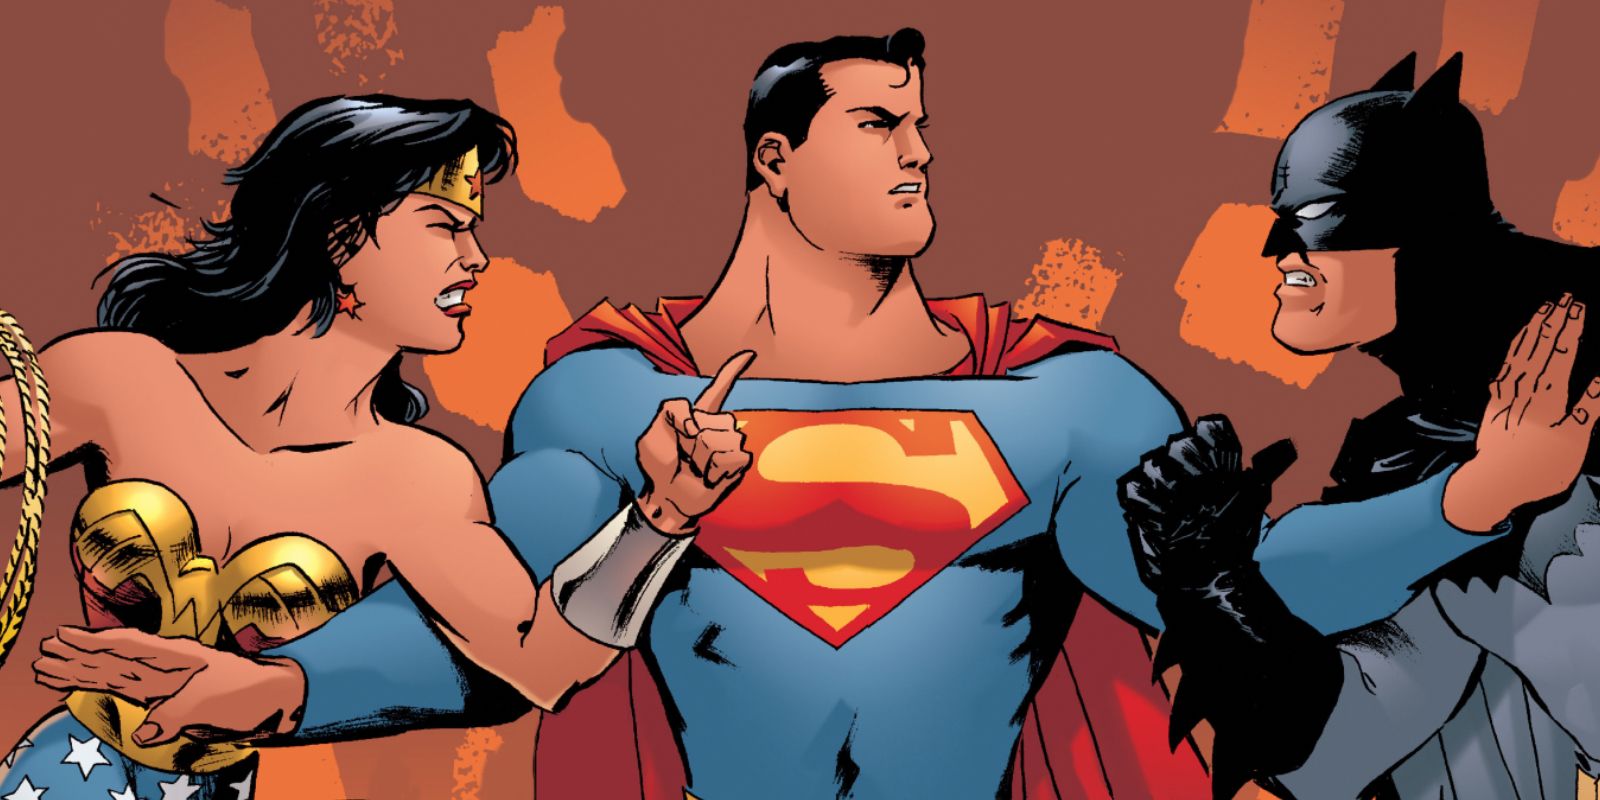 Superman Batman Wonder Woman Dynamic Relationship Friends Enemies Fight